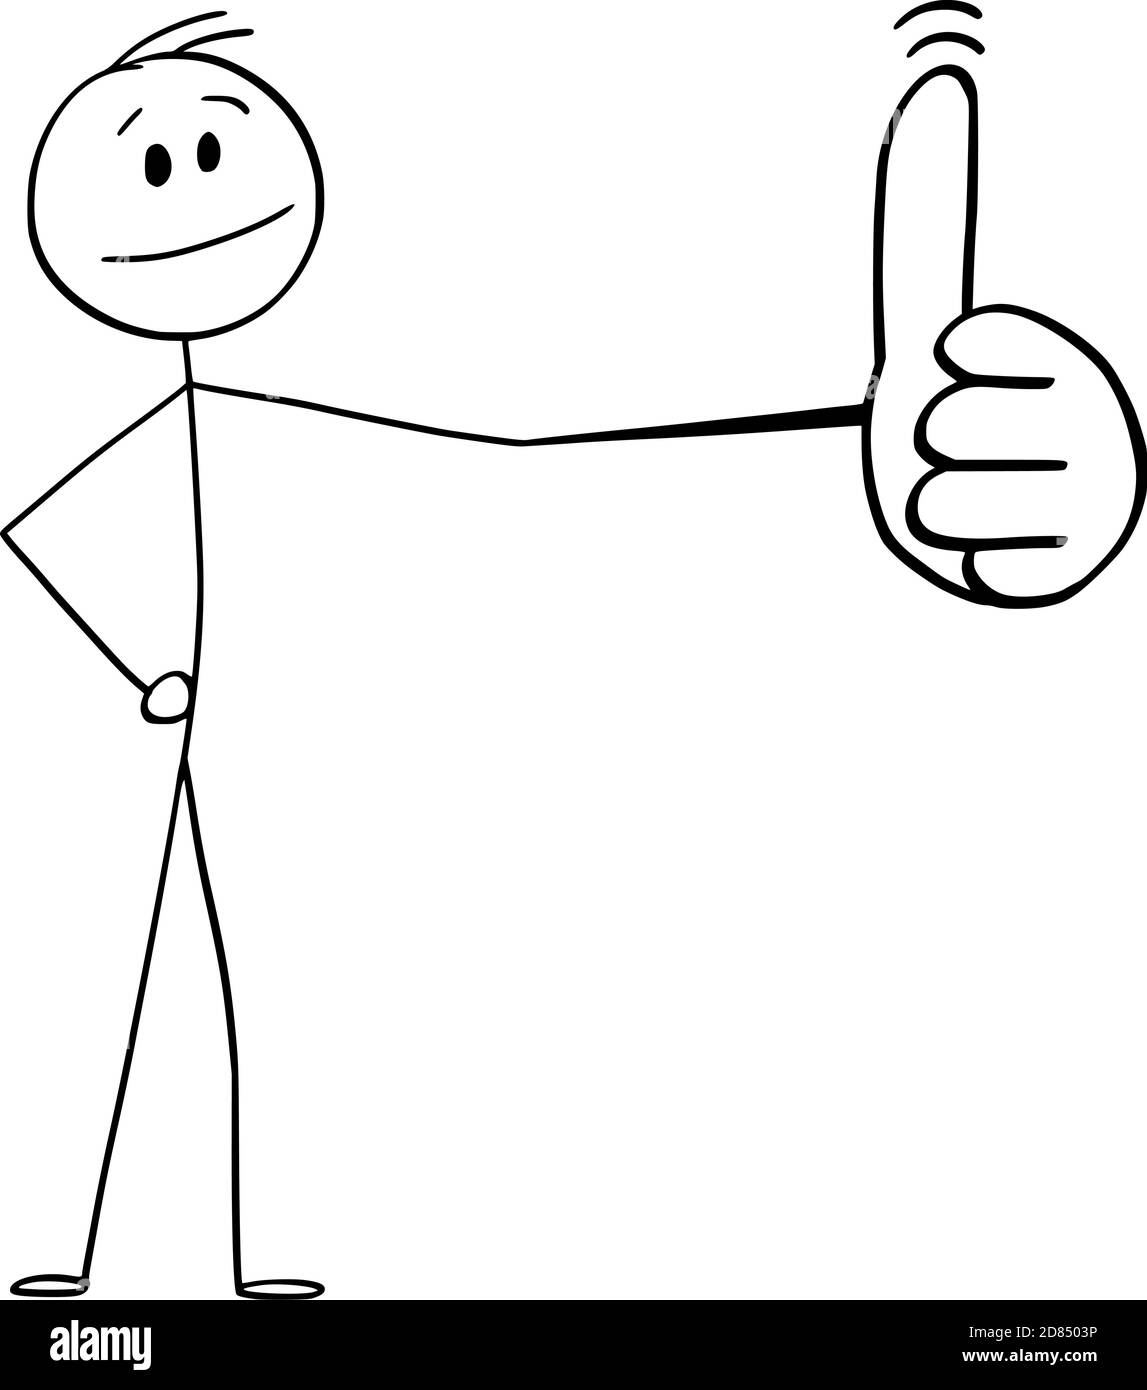 Vector cartoon stick figure illustration of man or businessman showing big thumb up gesture. Symbol of success or positivity. Stock Vector